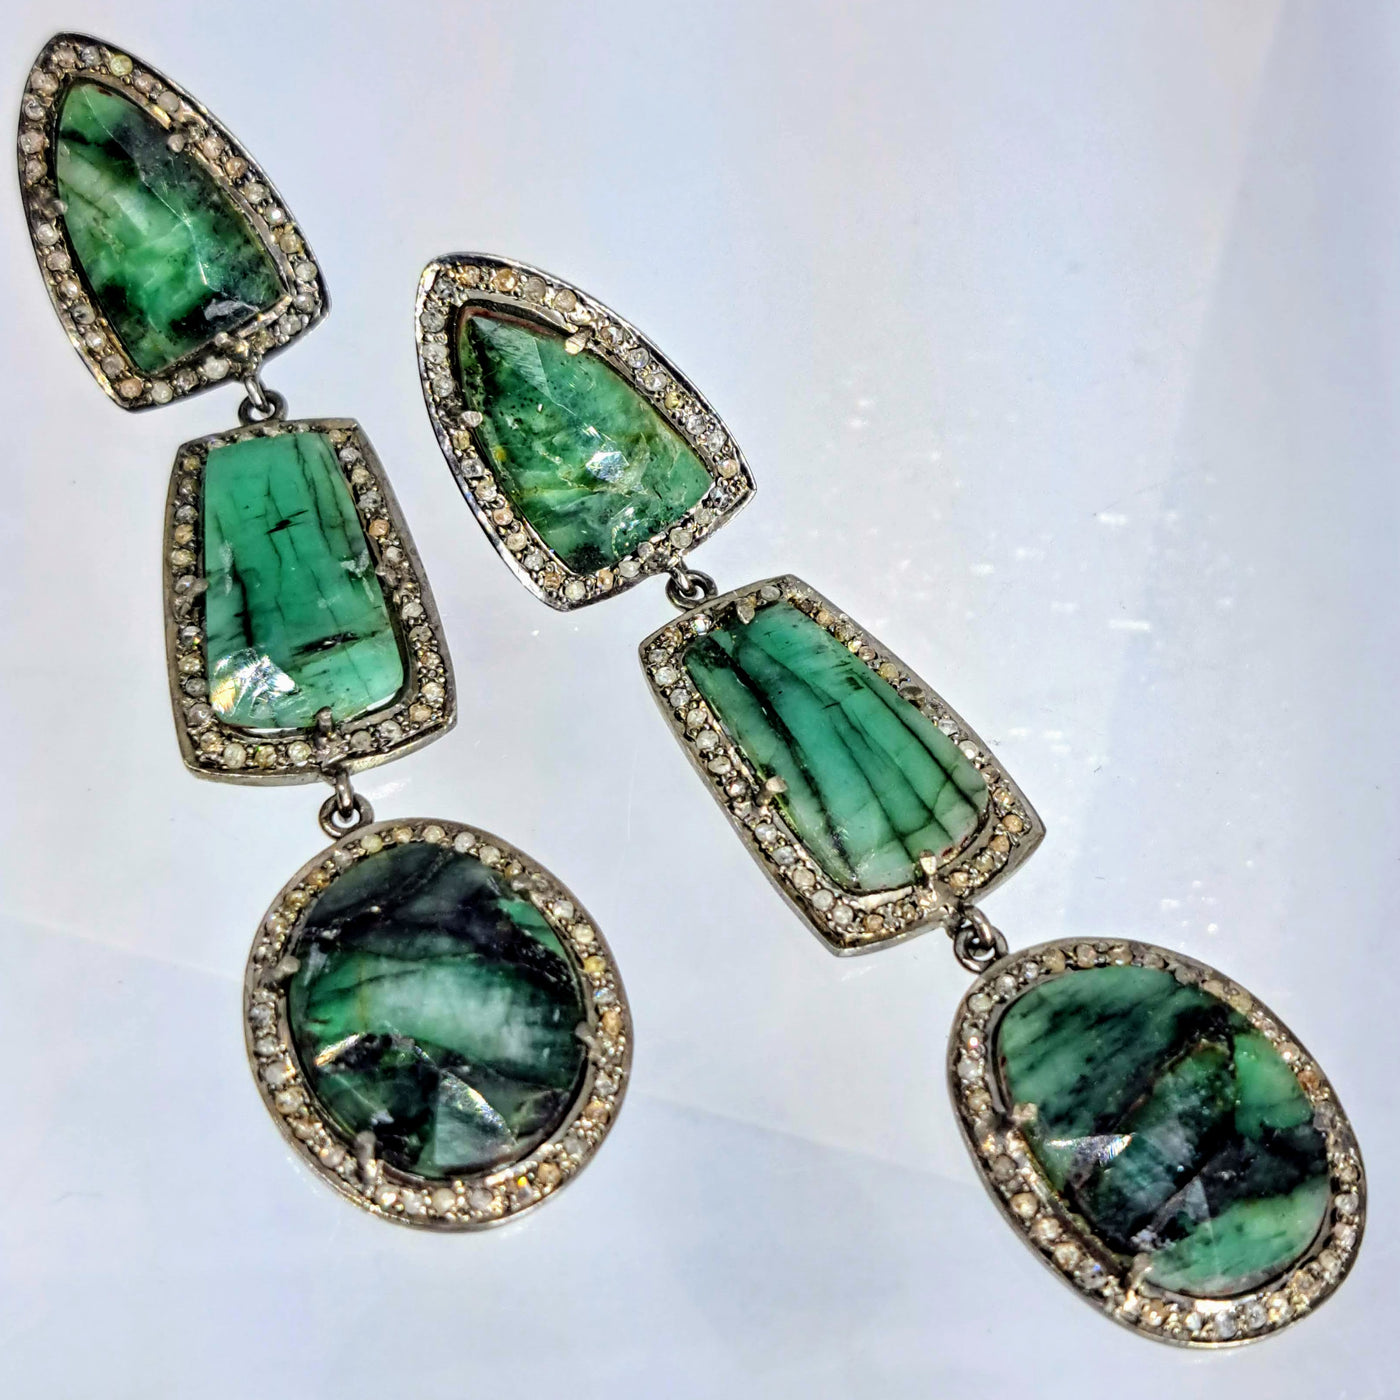 "Super Greens" Earrings - Emerald, Diamond, Black Sterling